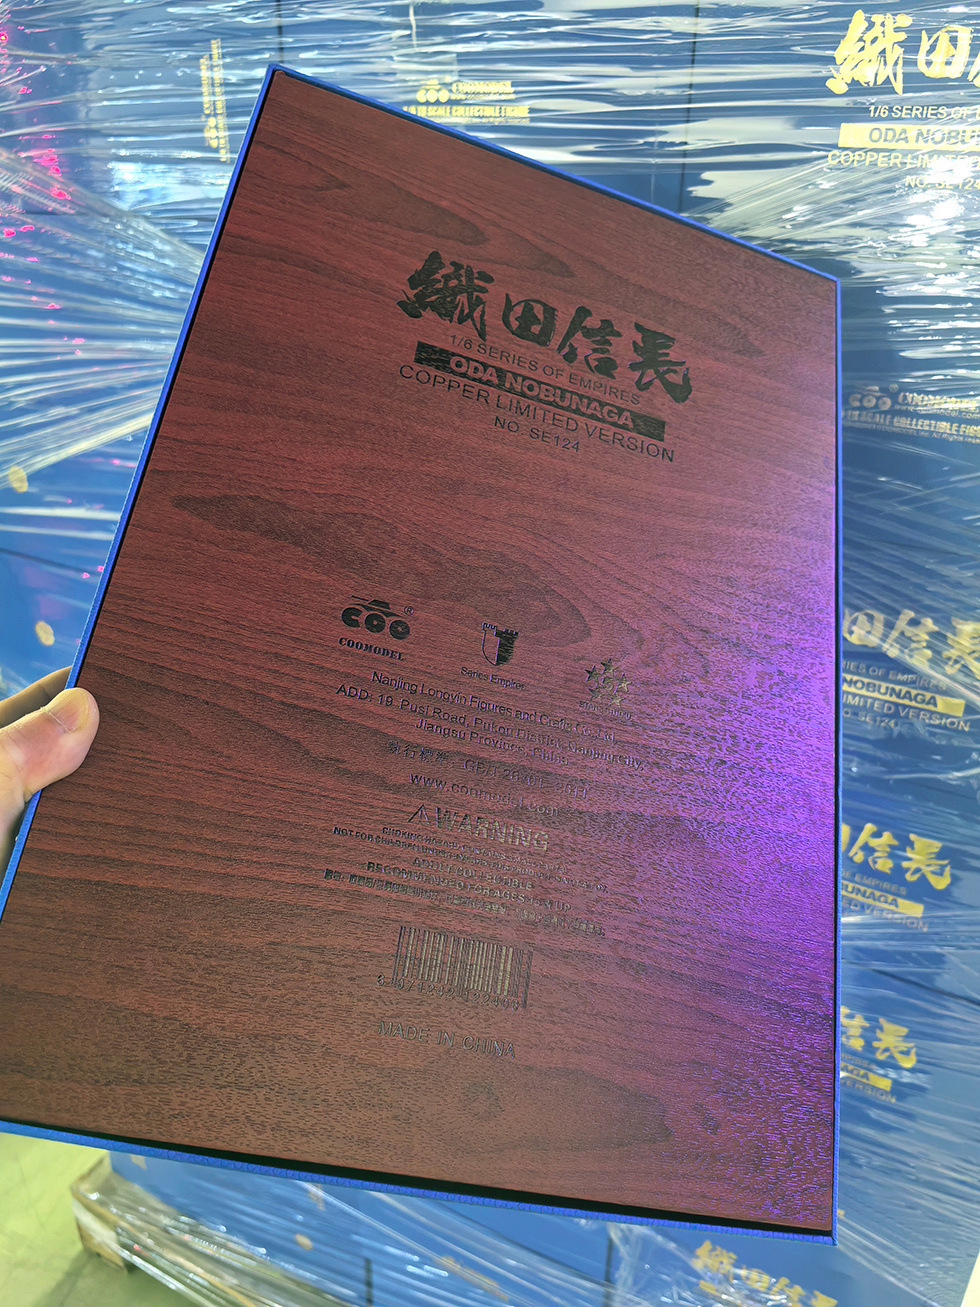 Male - NEW PRODUCT: COOMODEL: 1/6 Empire Series - Oda Nobunaga Samurai Edition/Hunting Edition/Pure Copper Standard Edition/Pure Copper Limited Collection Edition #SE124 B6b66012